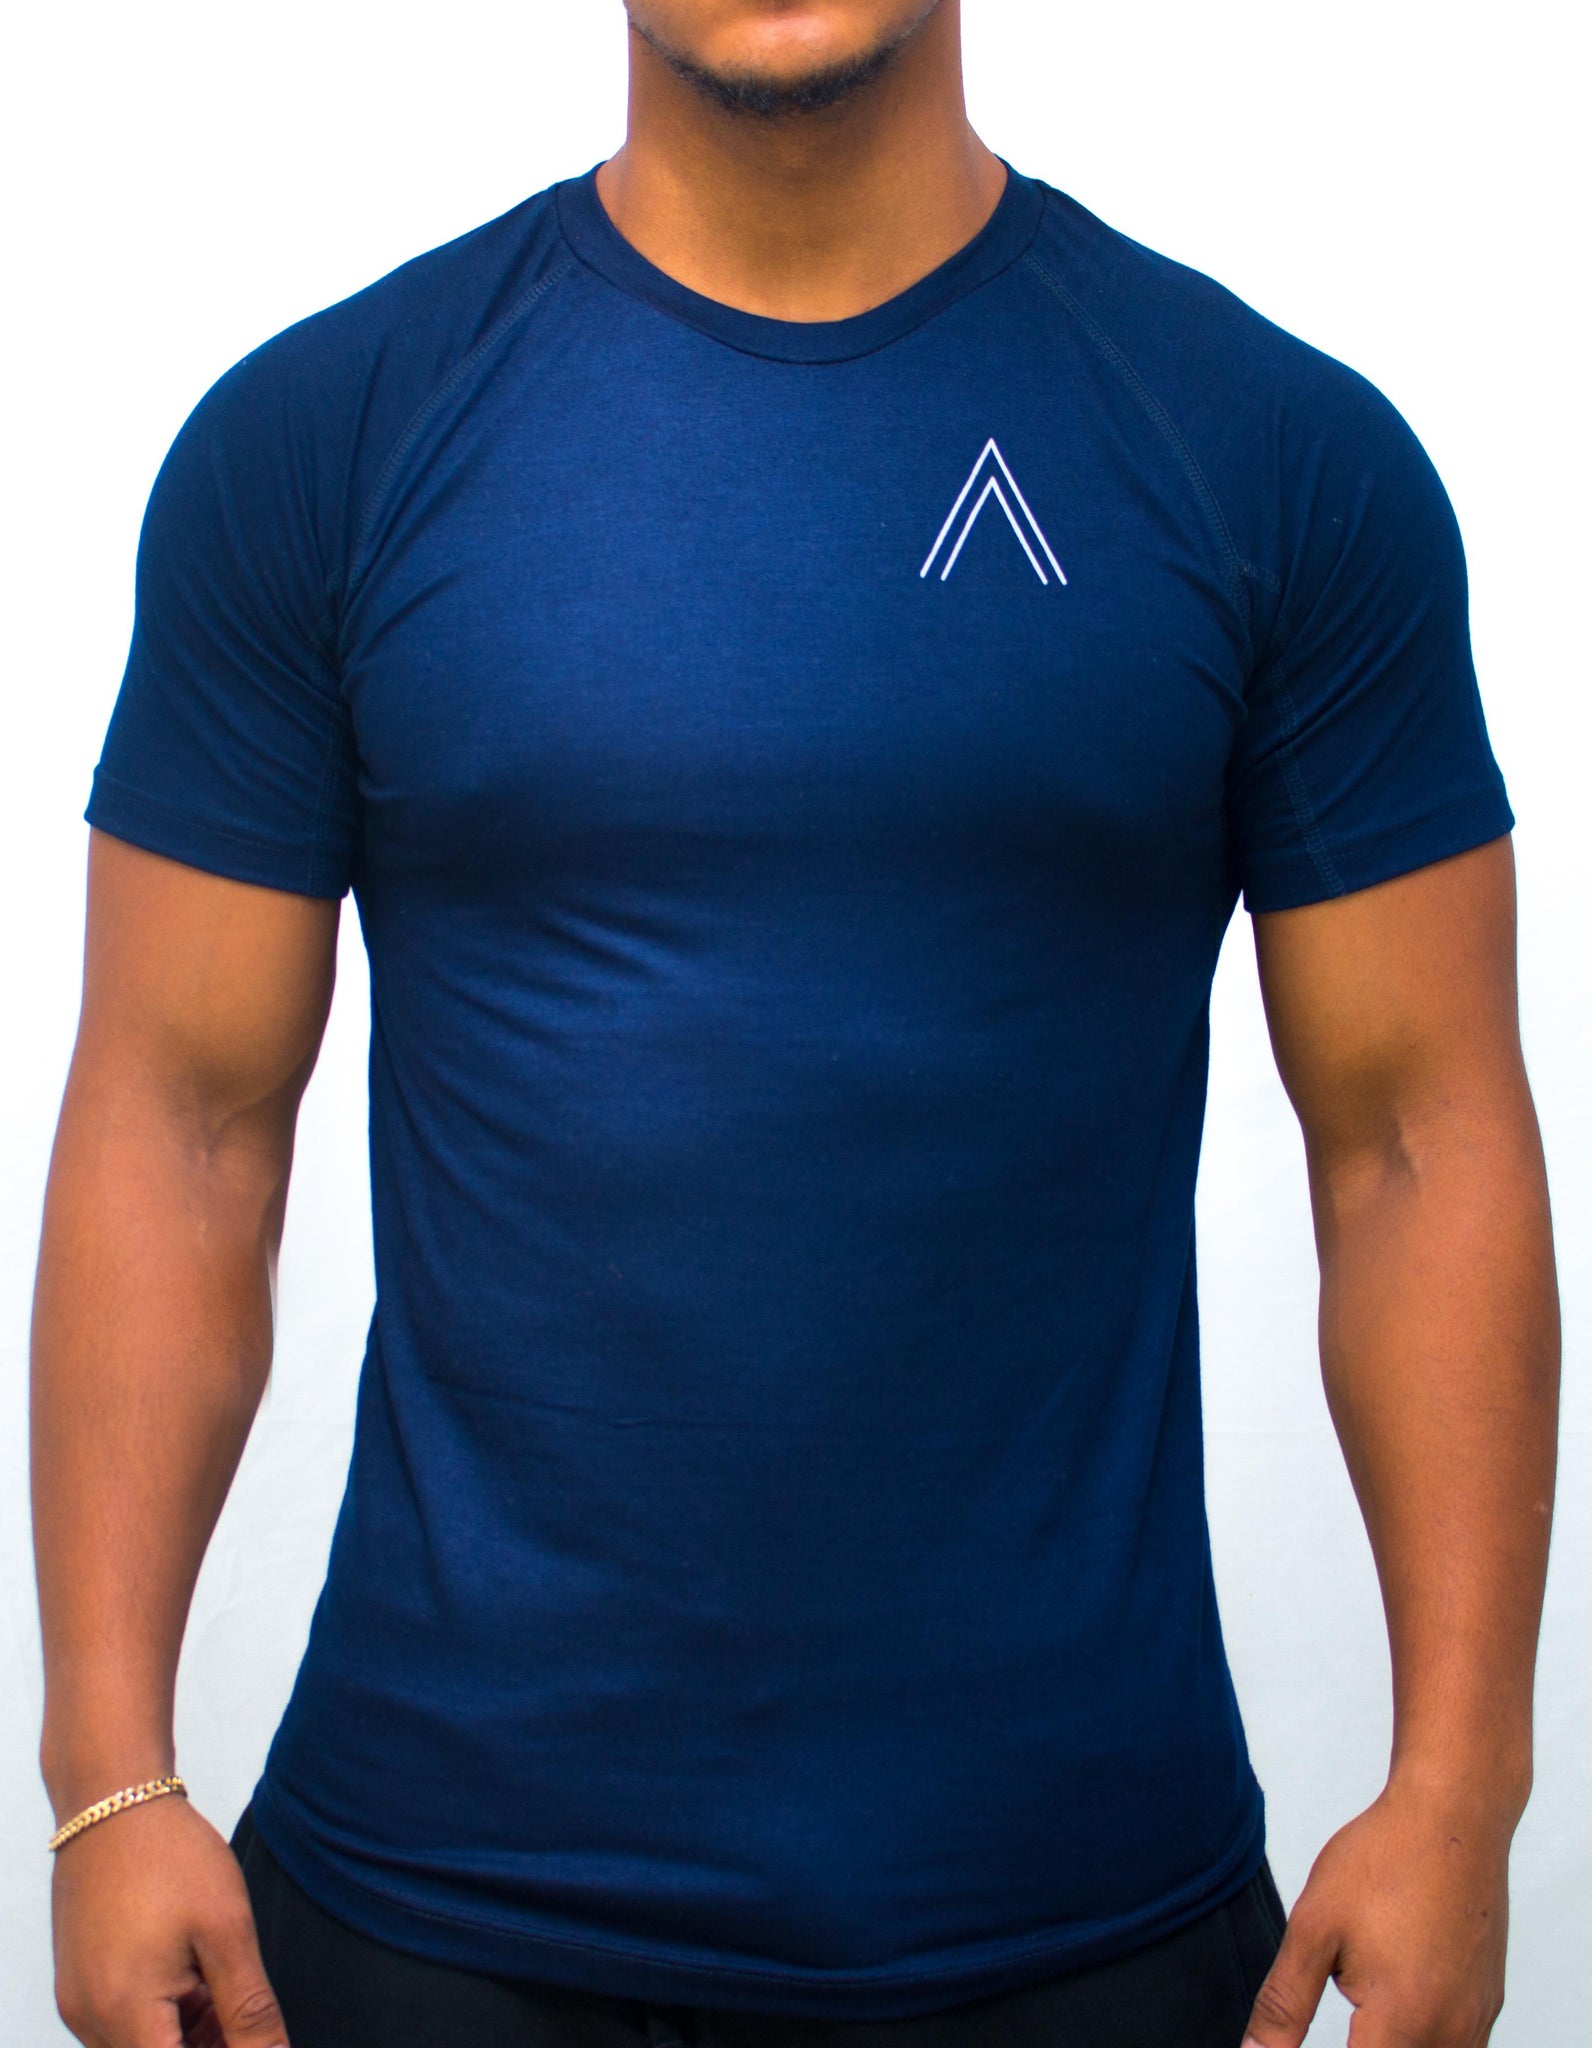 Navy Blue Performance T-Shirt